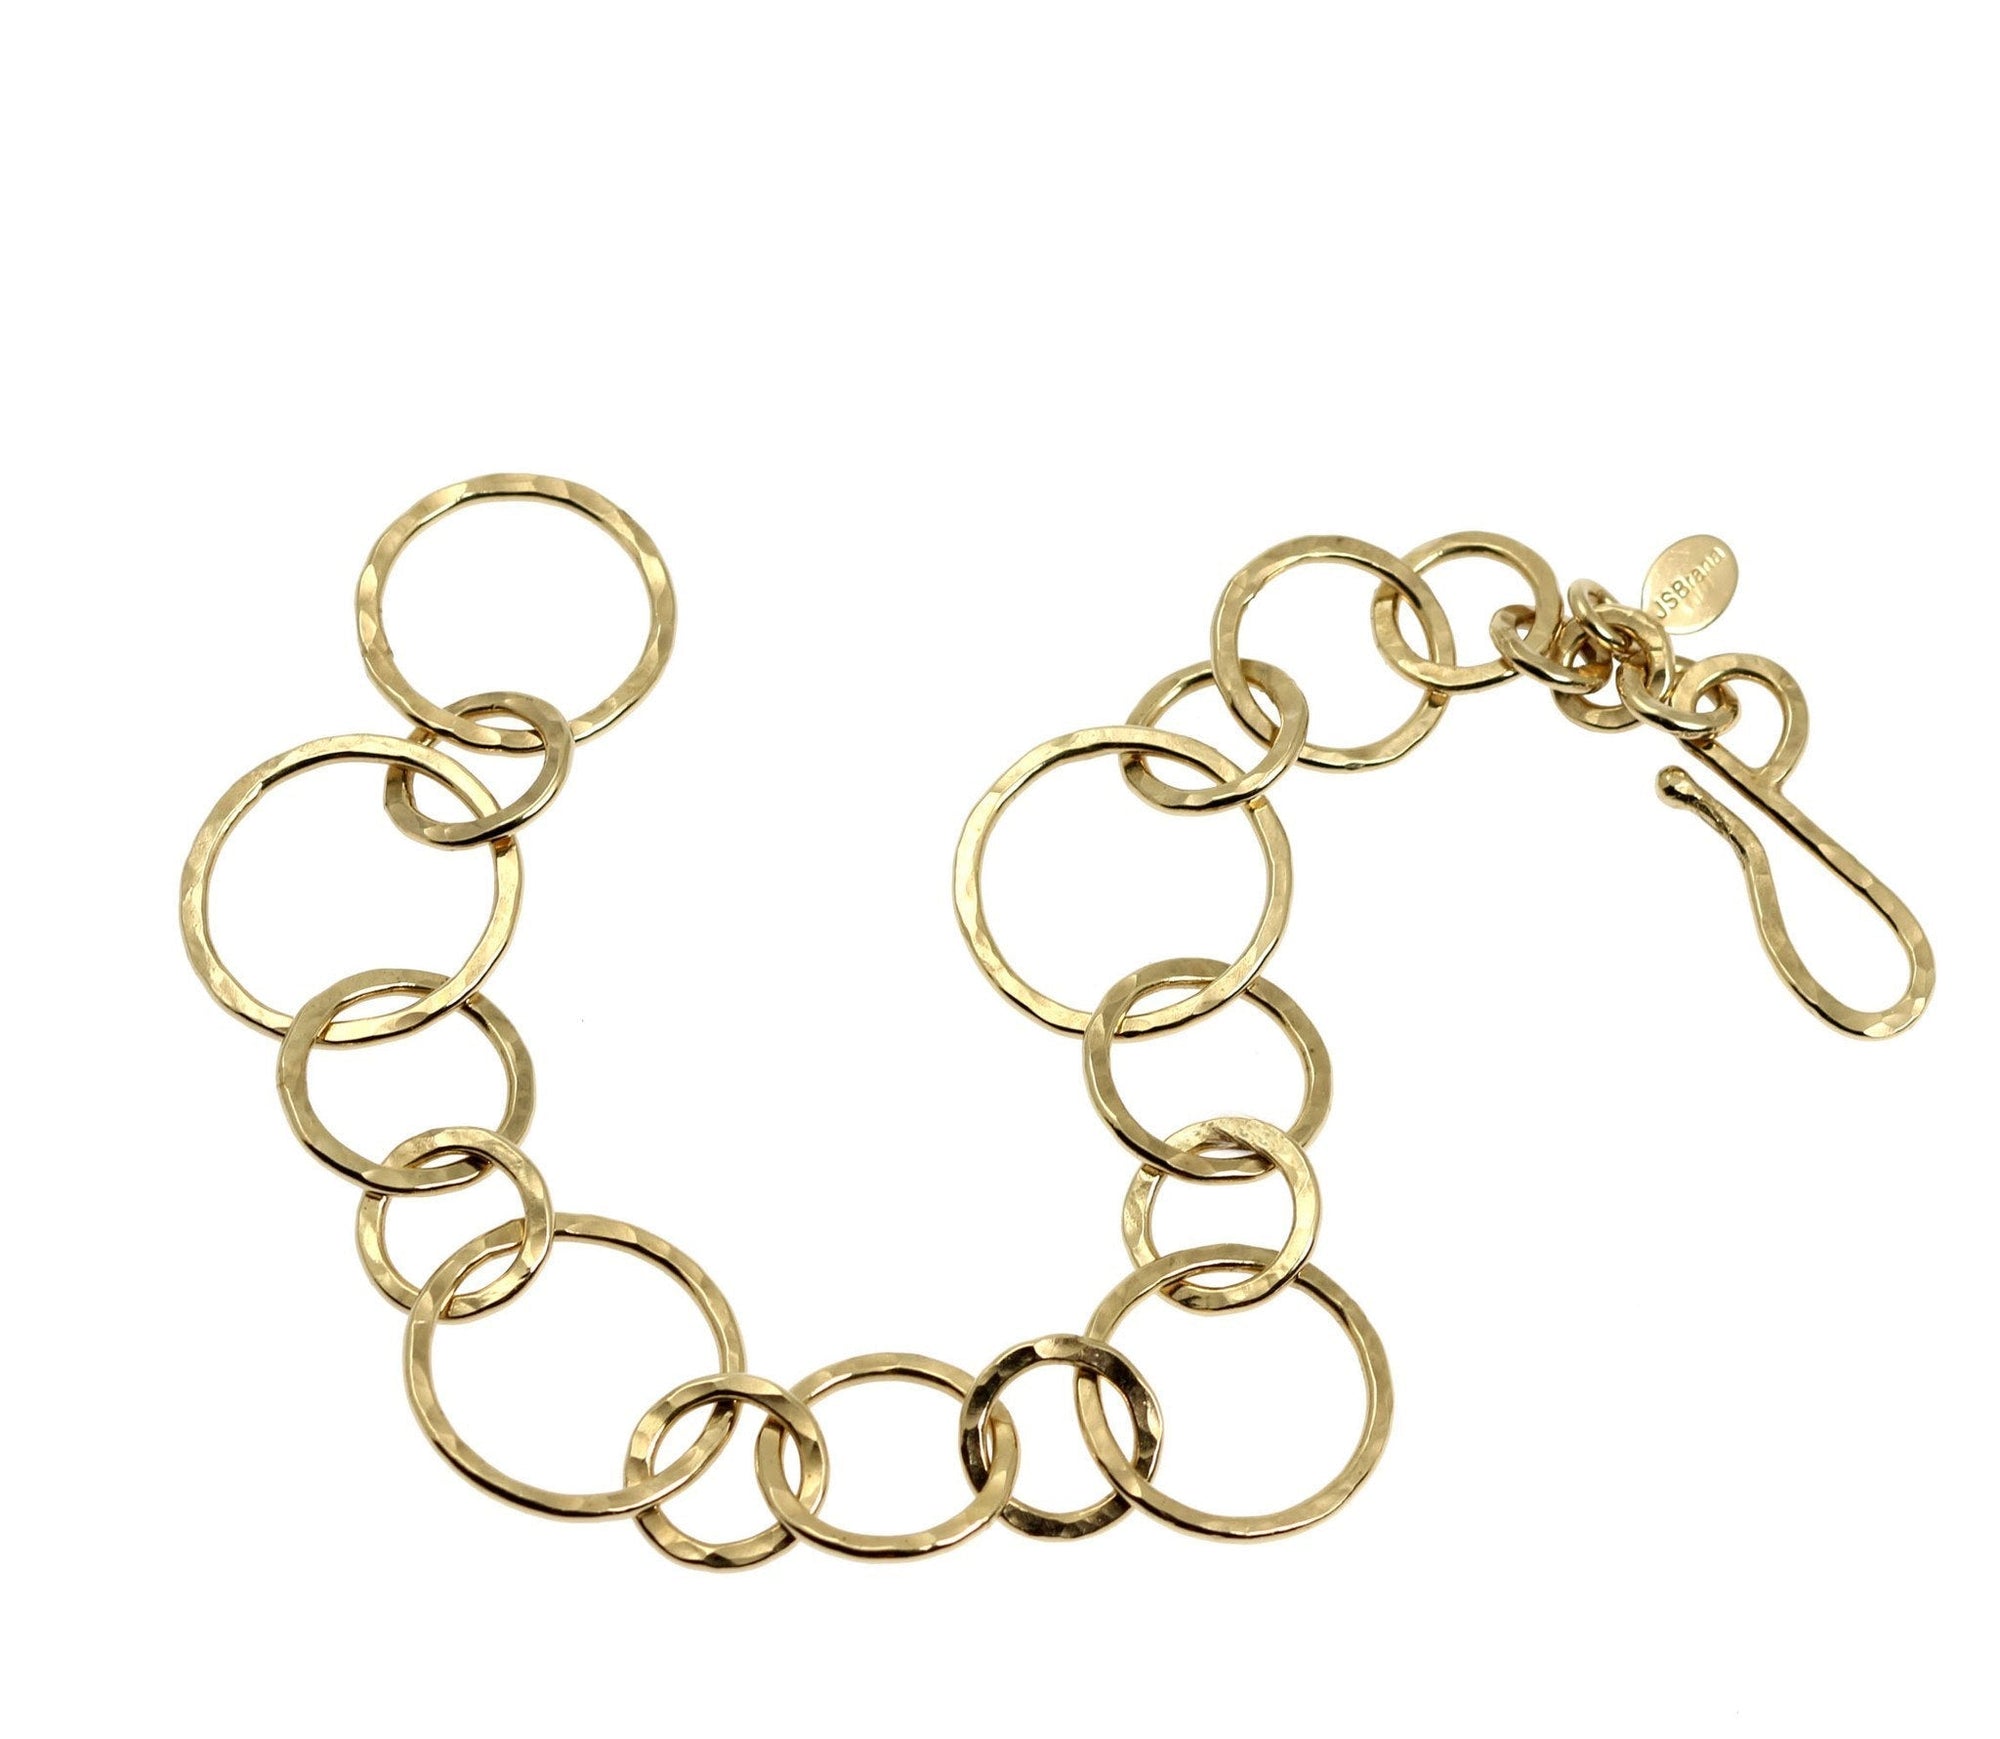 14K Gold-filled Hammered Link Chain Bracelet Close Up View